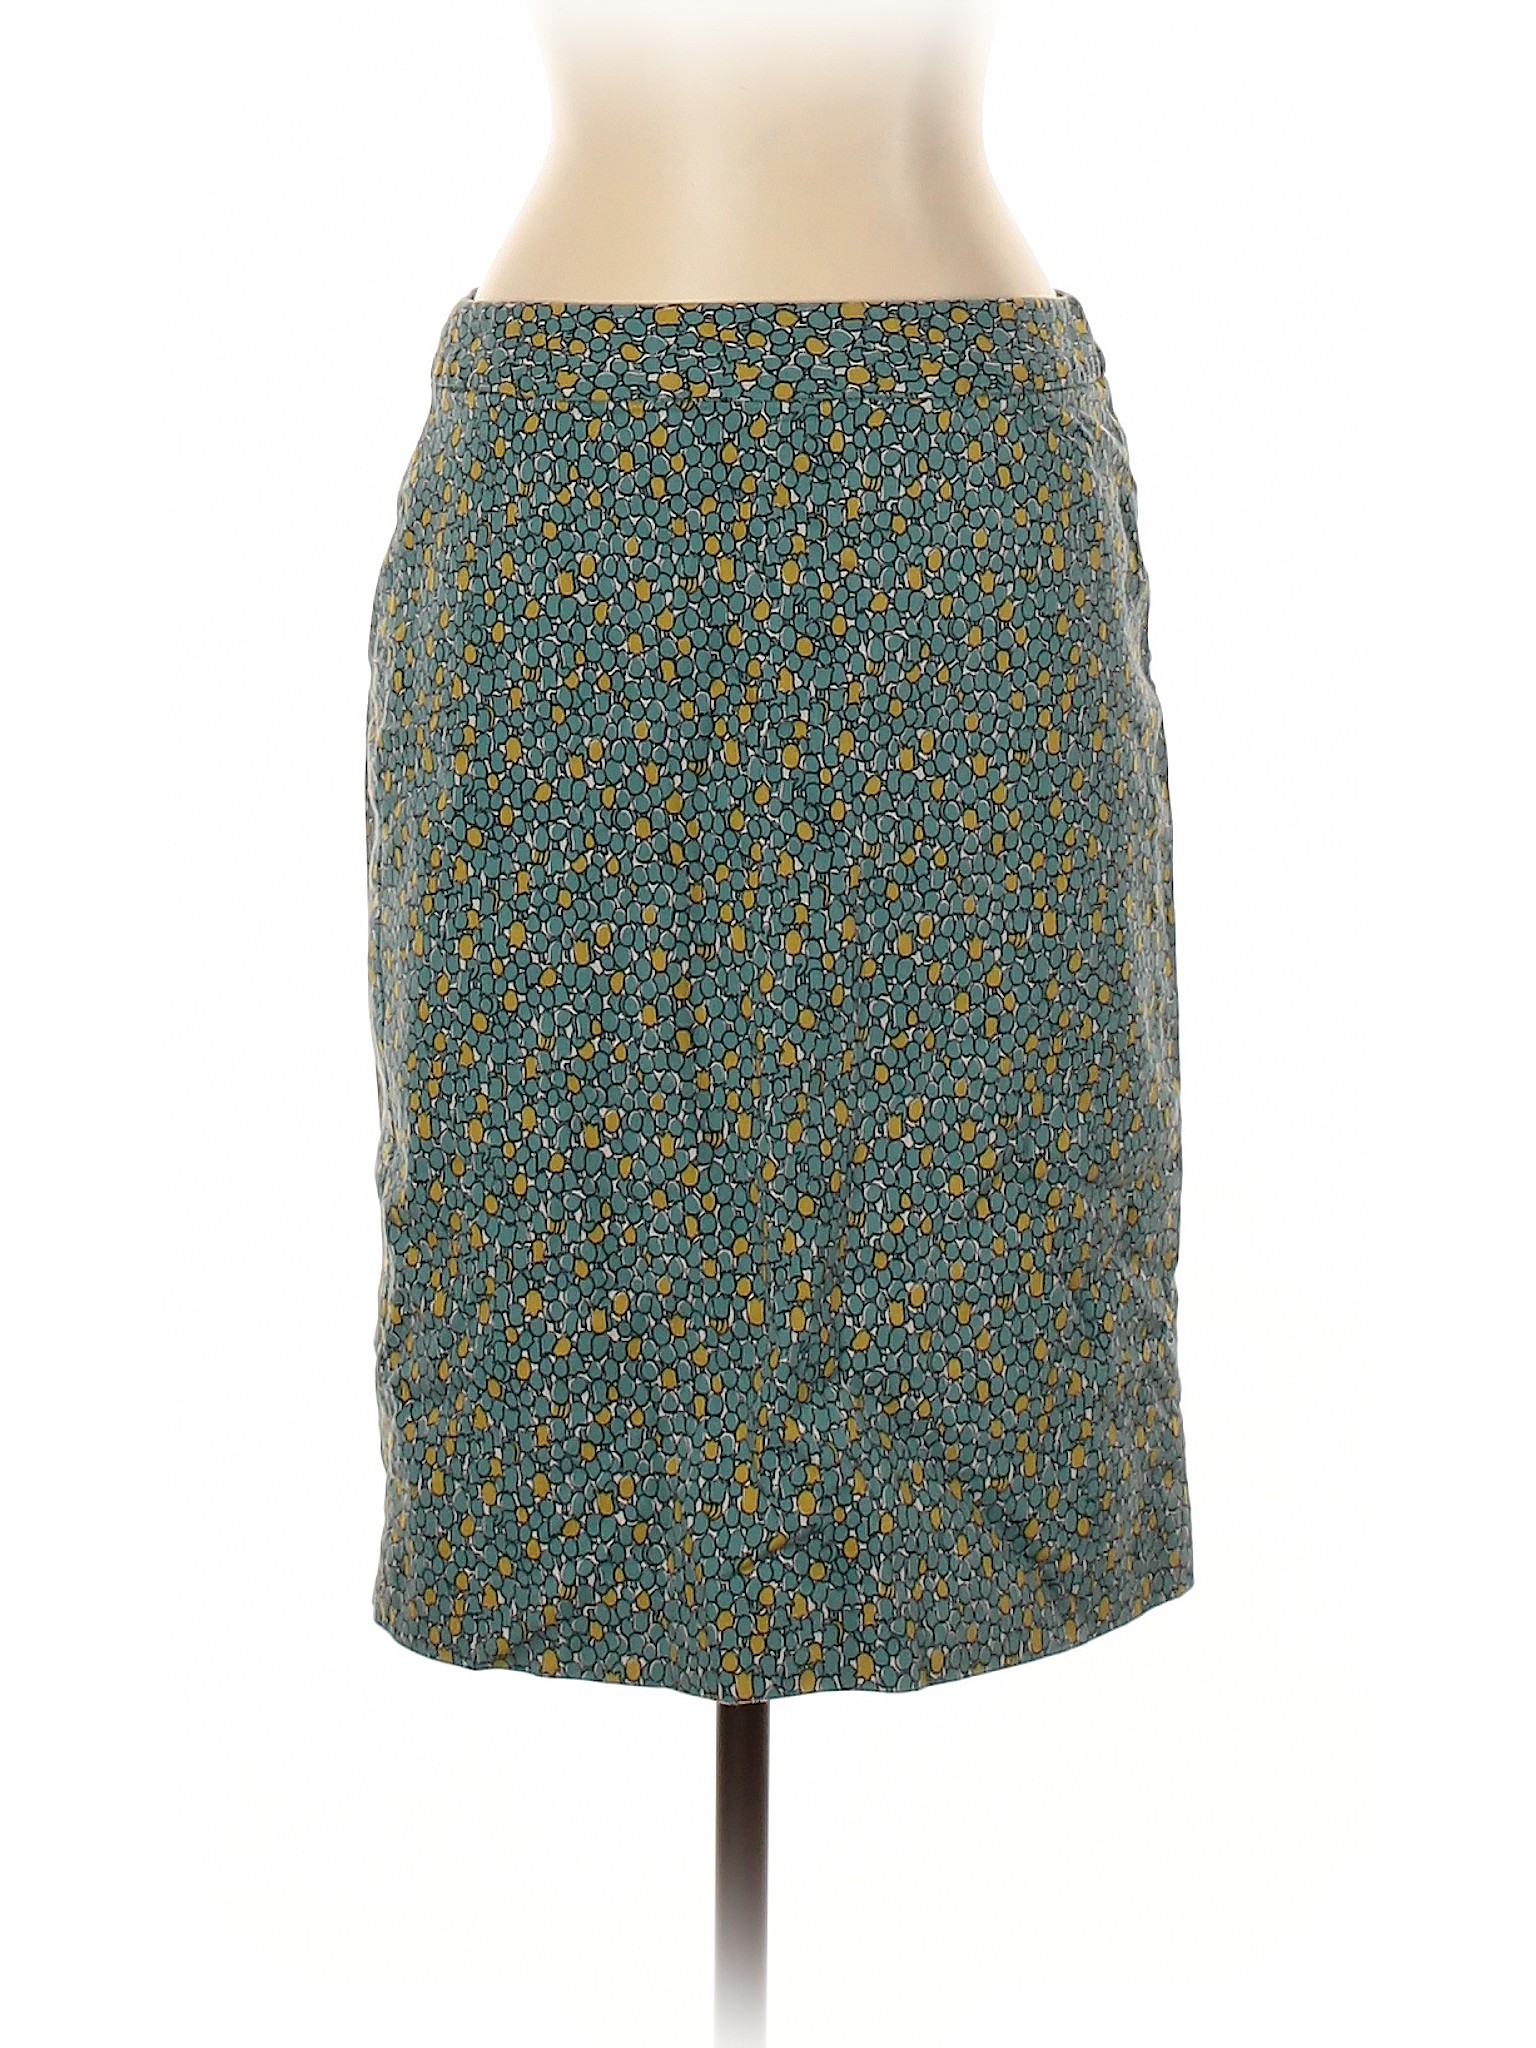 Talbots Women's Skirts On Sale Up To 90% Off Retail | thredUP